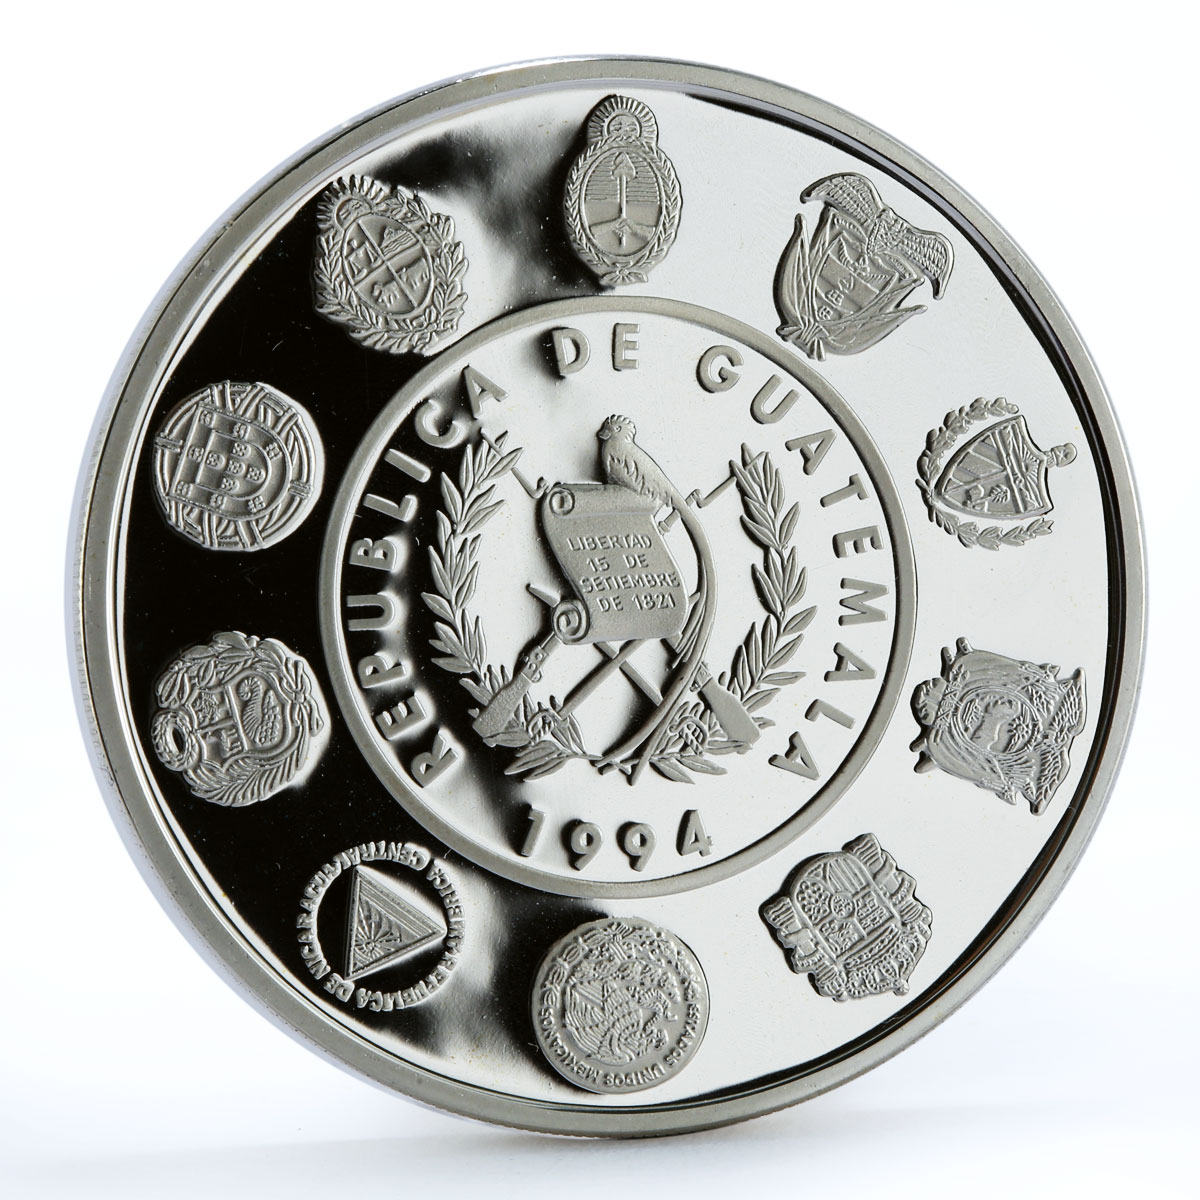 Guatemala 1 quetzal Ibero American series II Horned Guan proof silver coin 1994